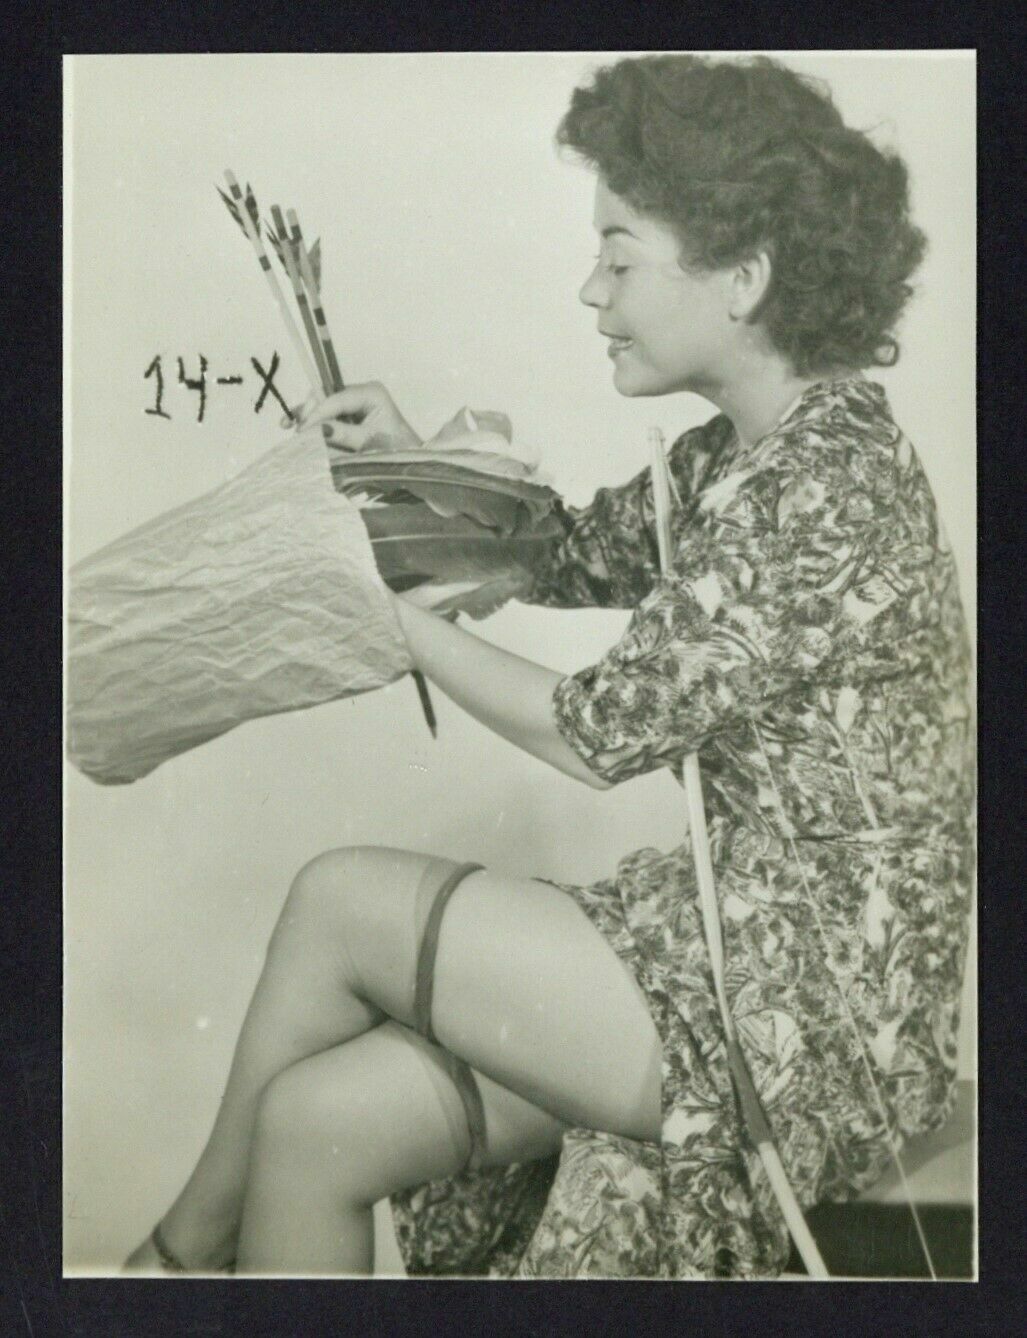 Betty Kidder Burlesque Star 1950 SIlk Stockings Legs Nylons Vintage Photo Q1909